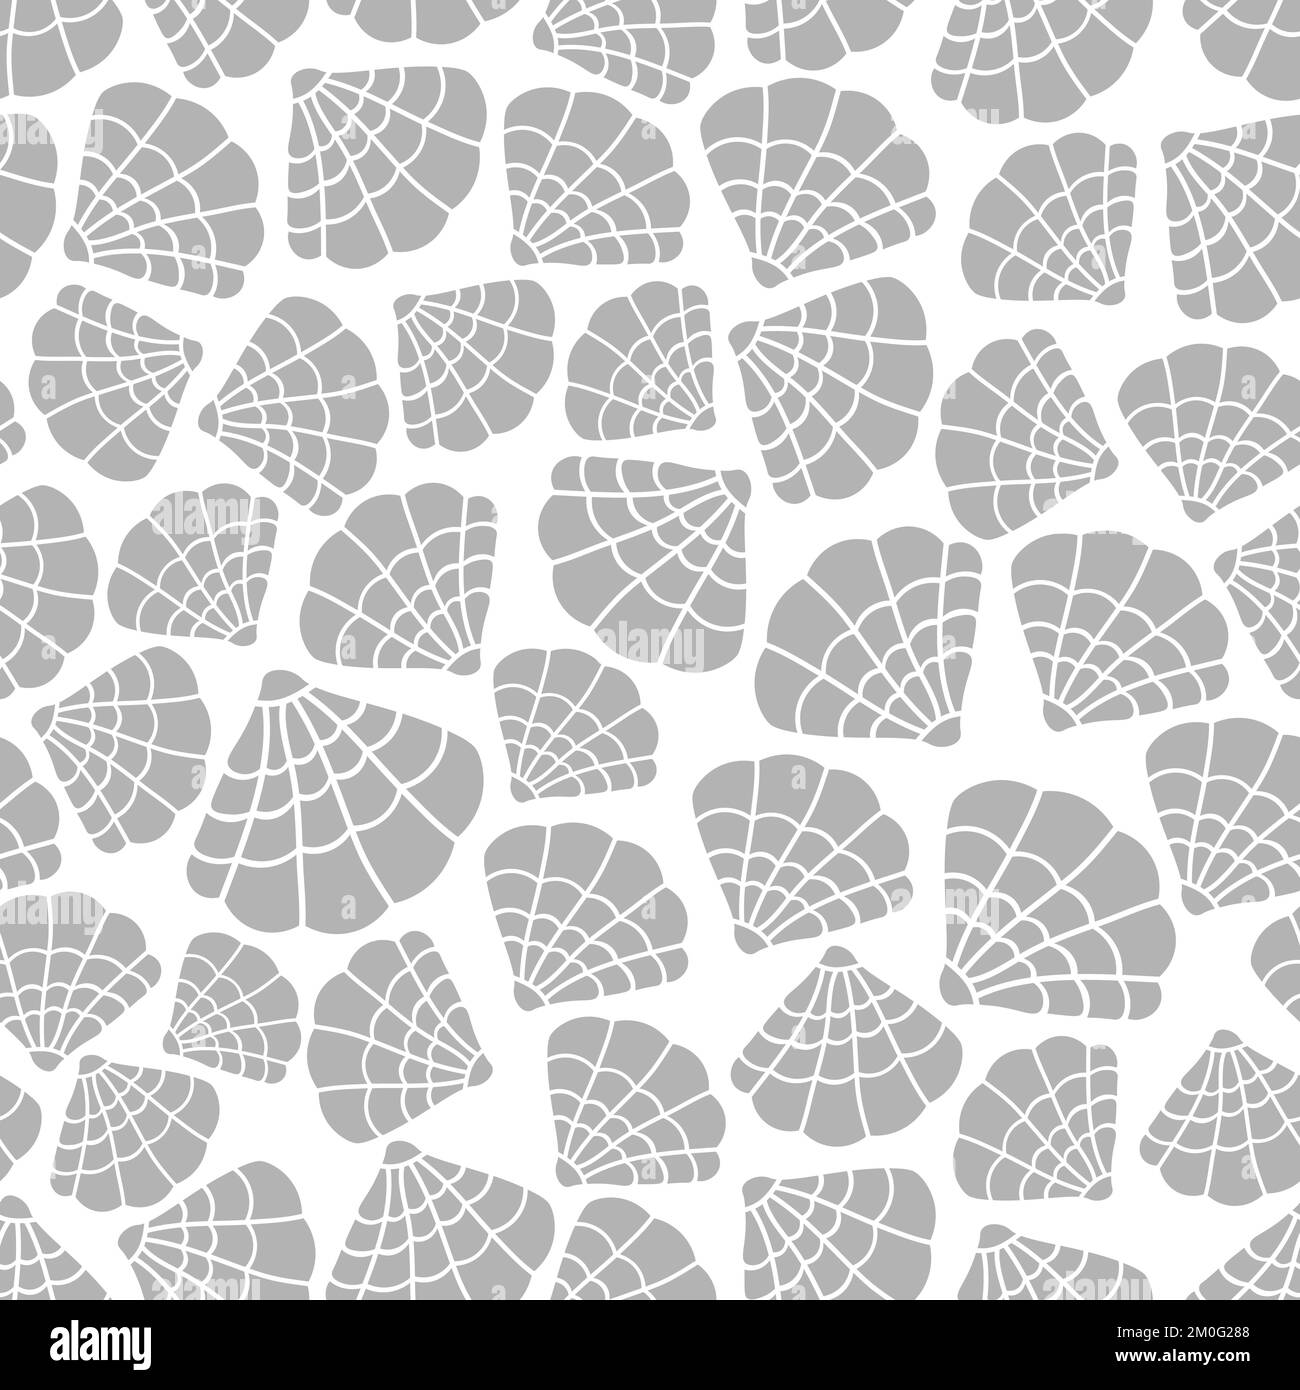 Vector seamless pattern illustration with seashells graphic symbols. Stock Vector